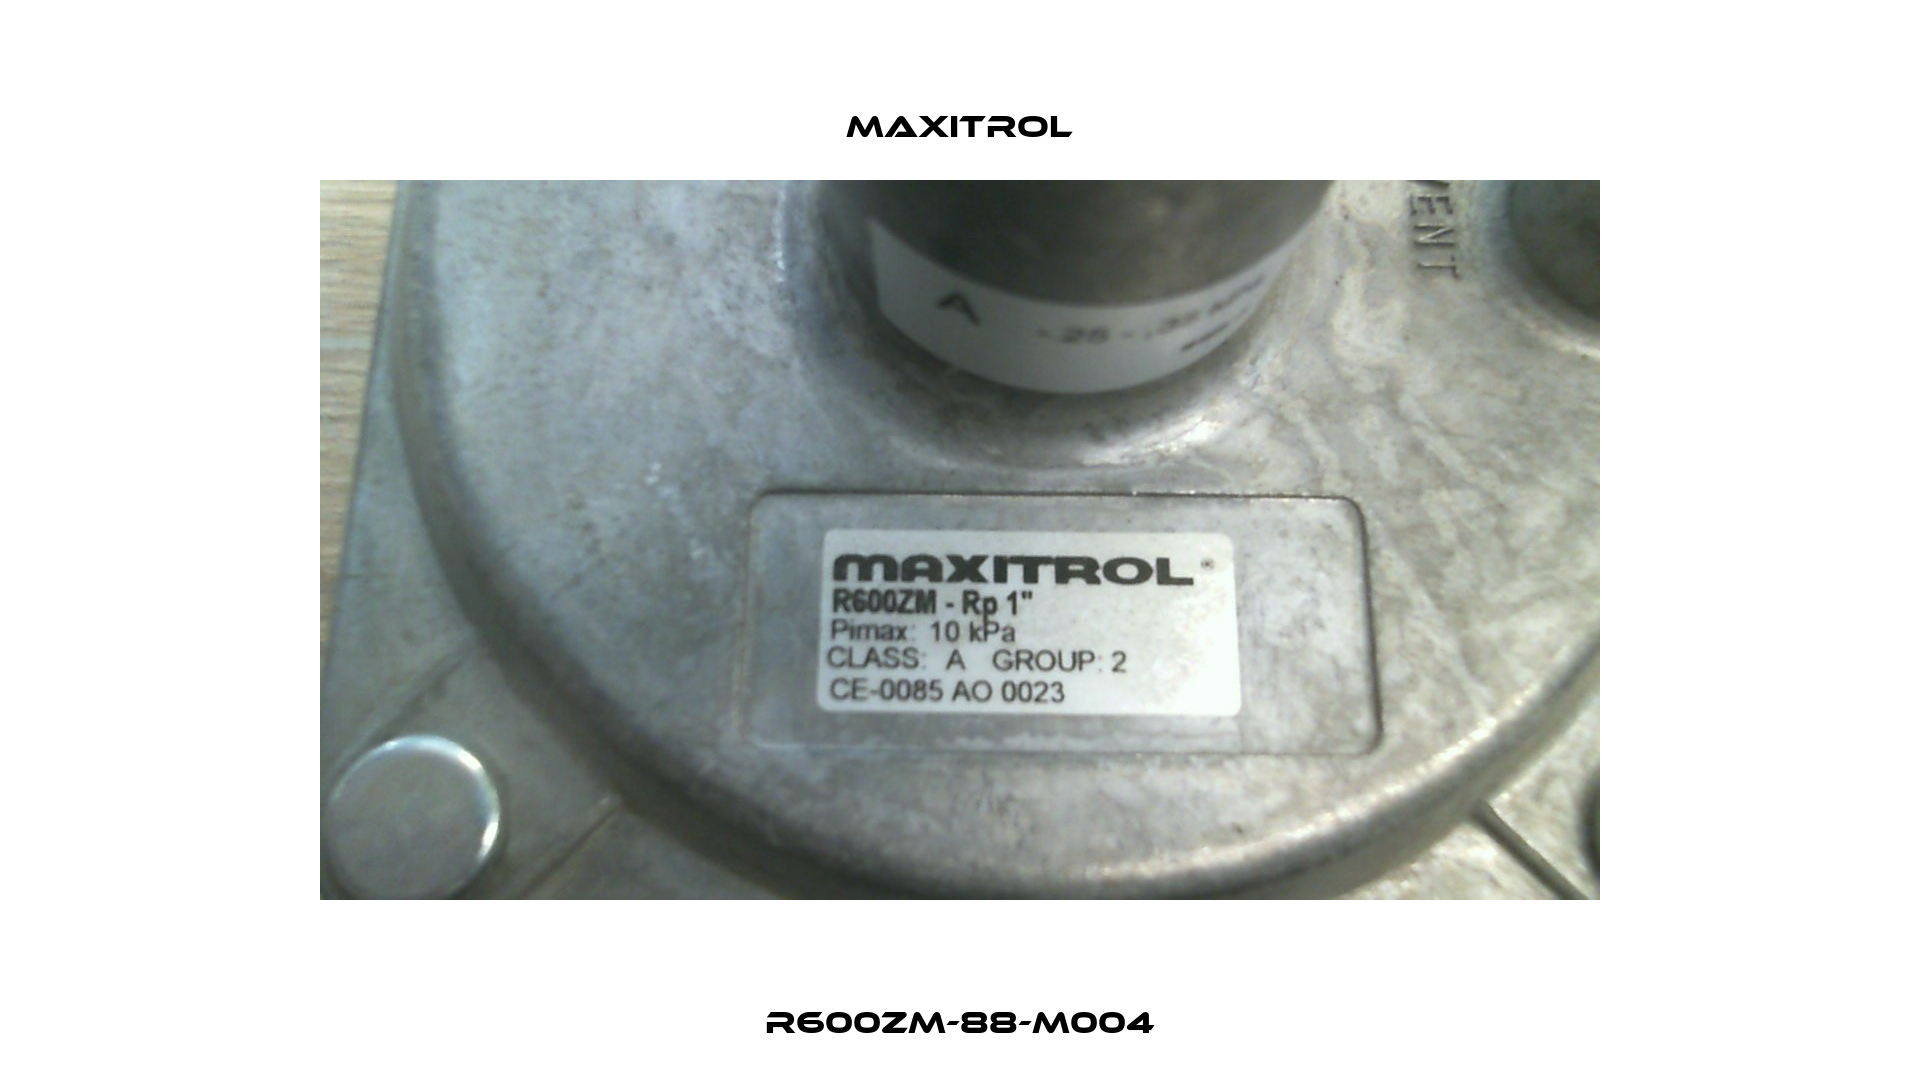 R600ZM-88-M004 Maxitrol